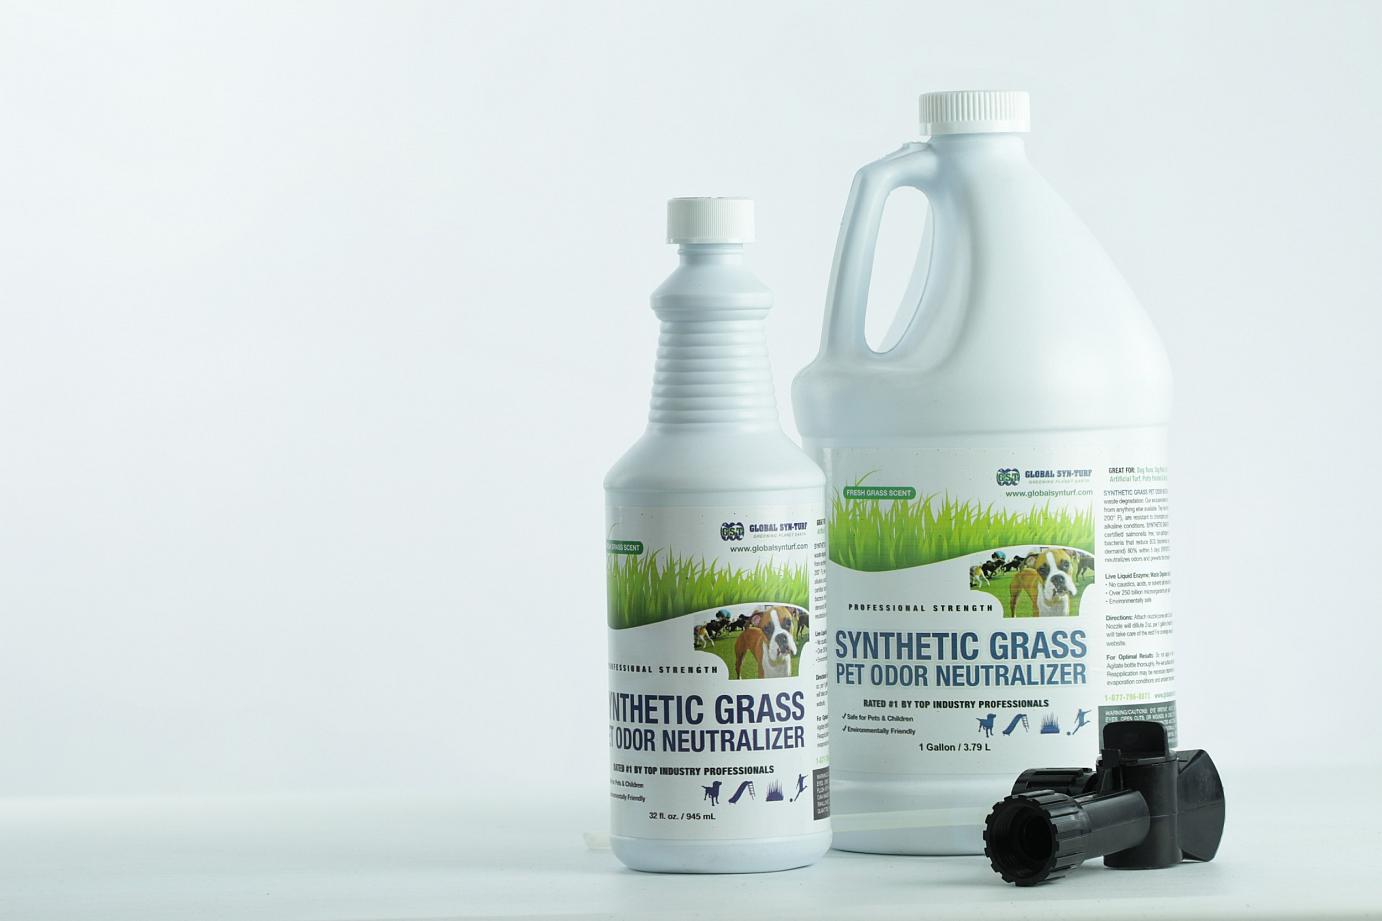 Pet Odor Neutralizer Artificial Grass Washington Synthetic Grass Tools